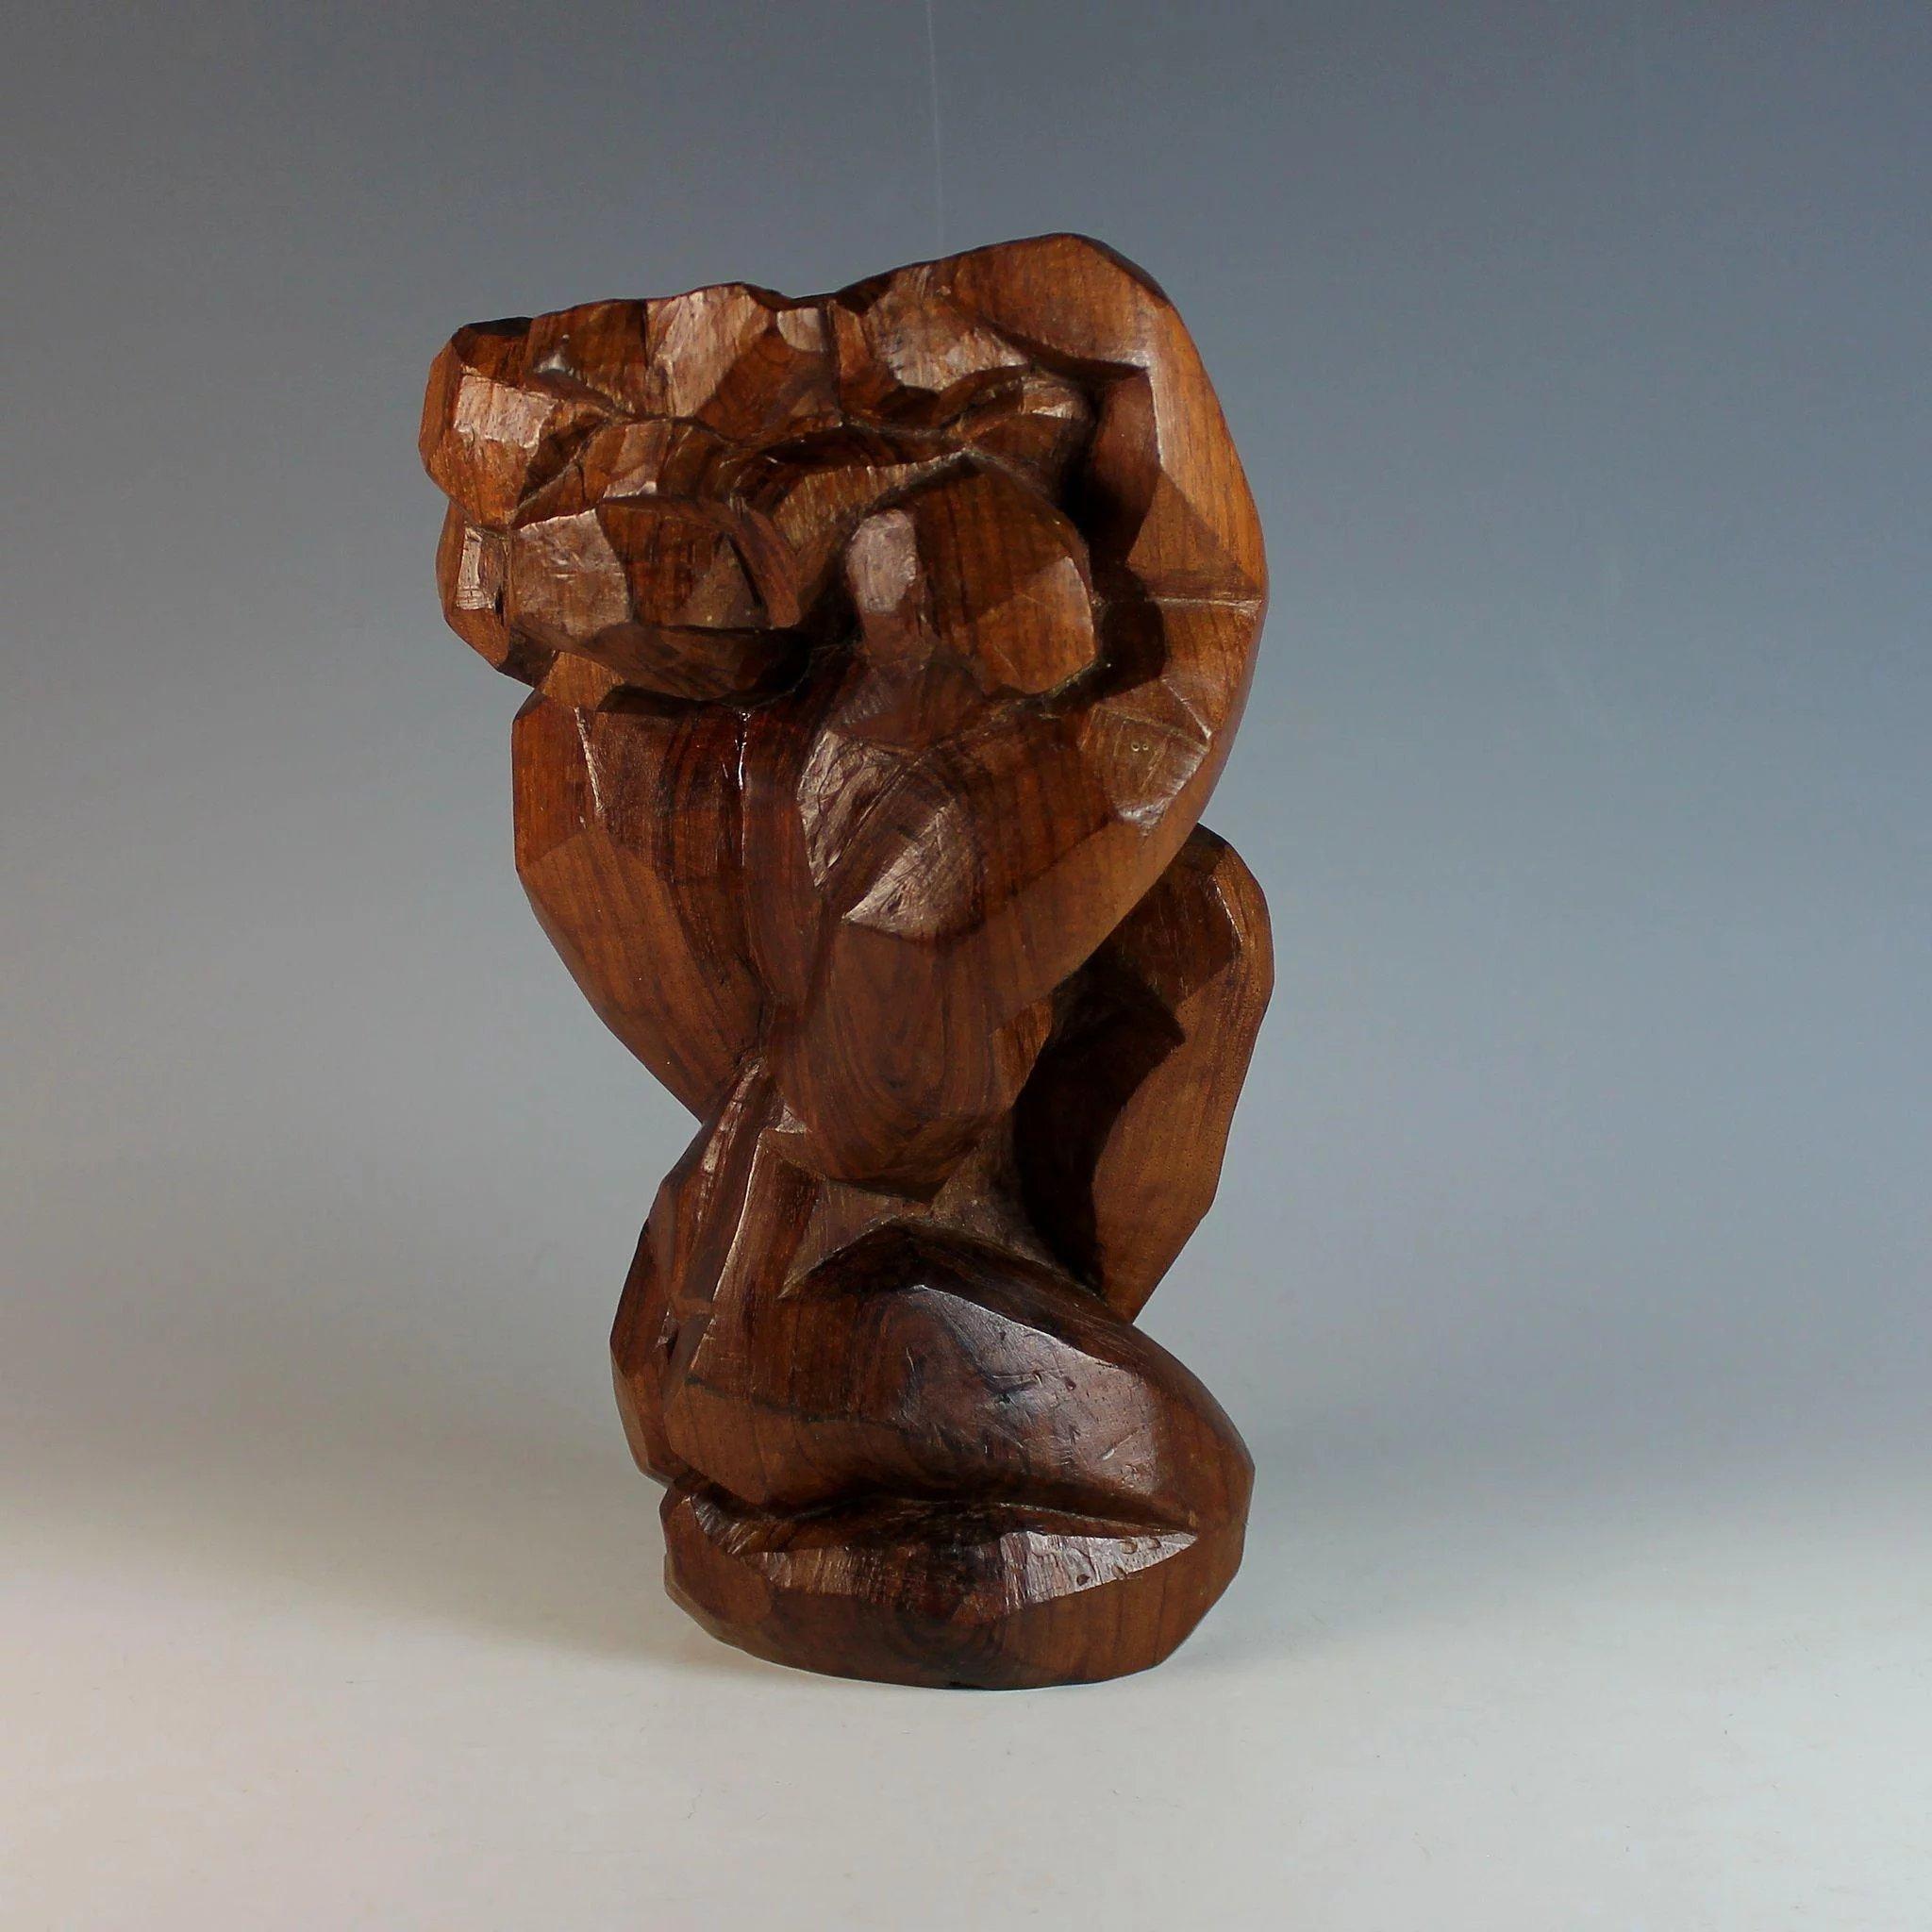 Kneeling Man - Brown Figurative Sculpture by J. Gallardo